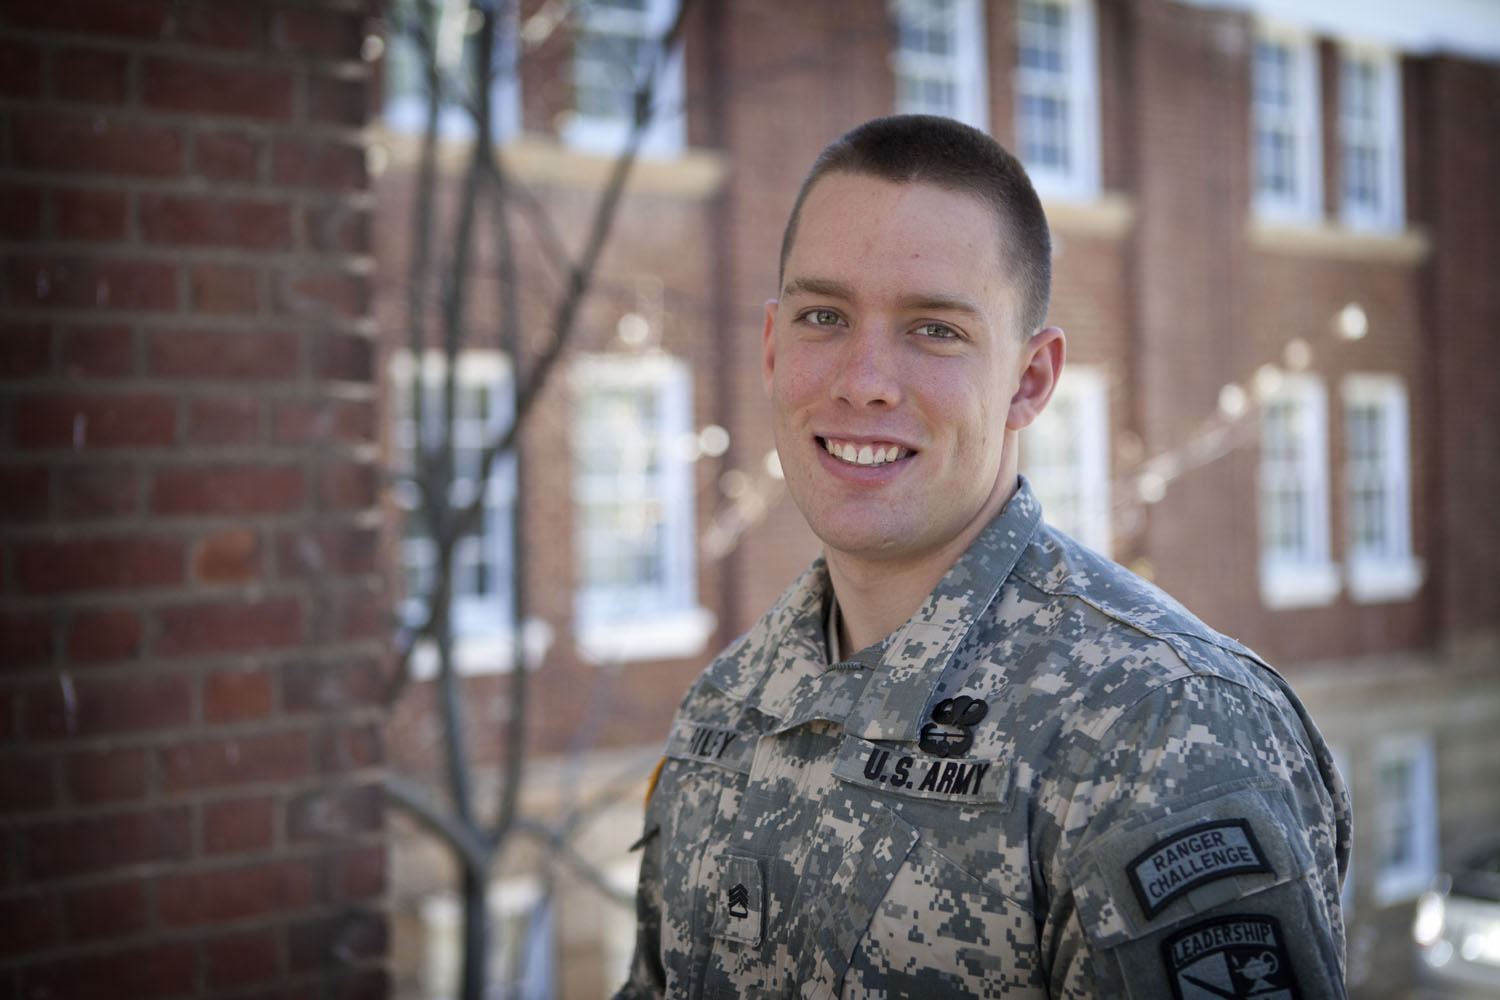 Joseph Riley headshot in Military camo uniform